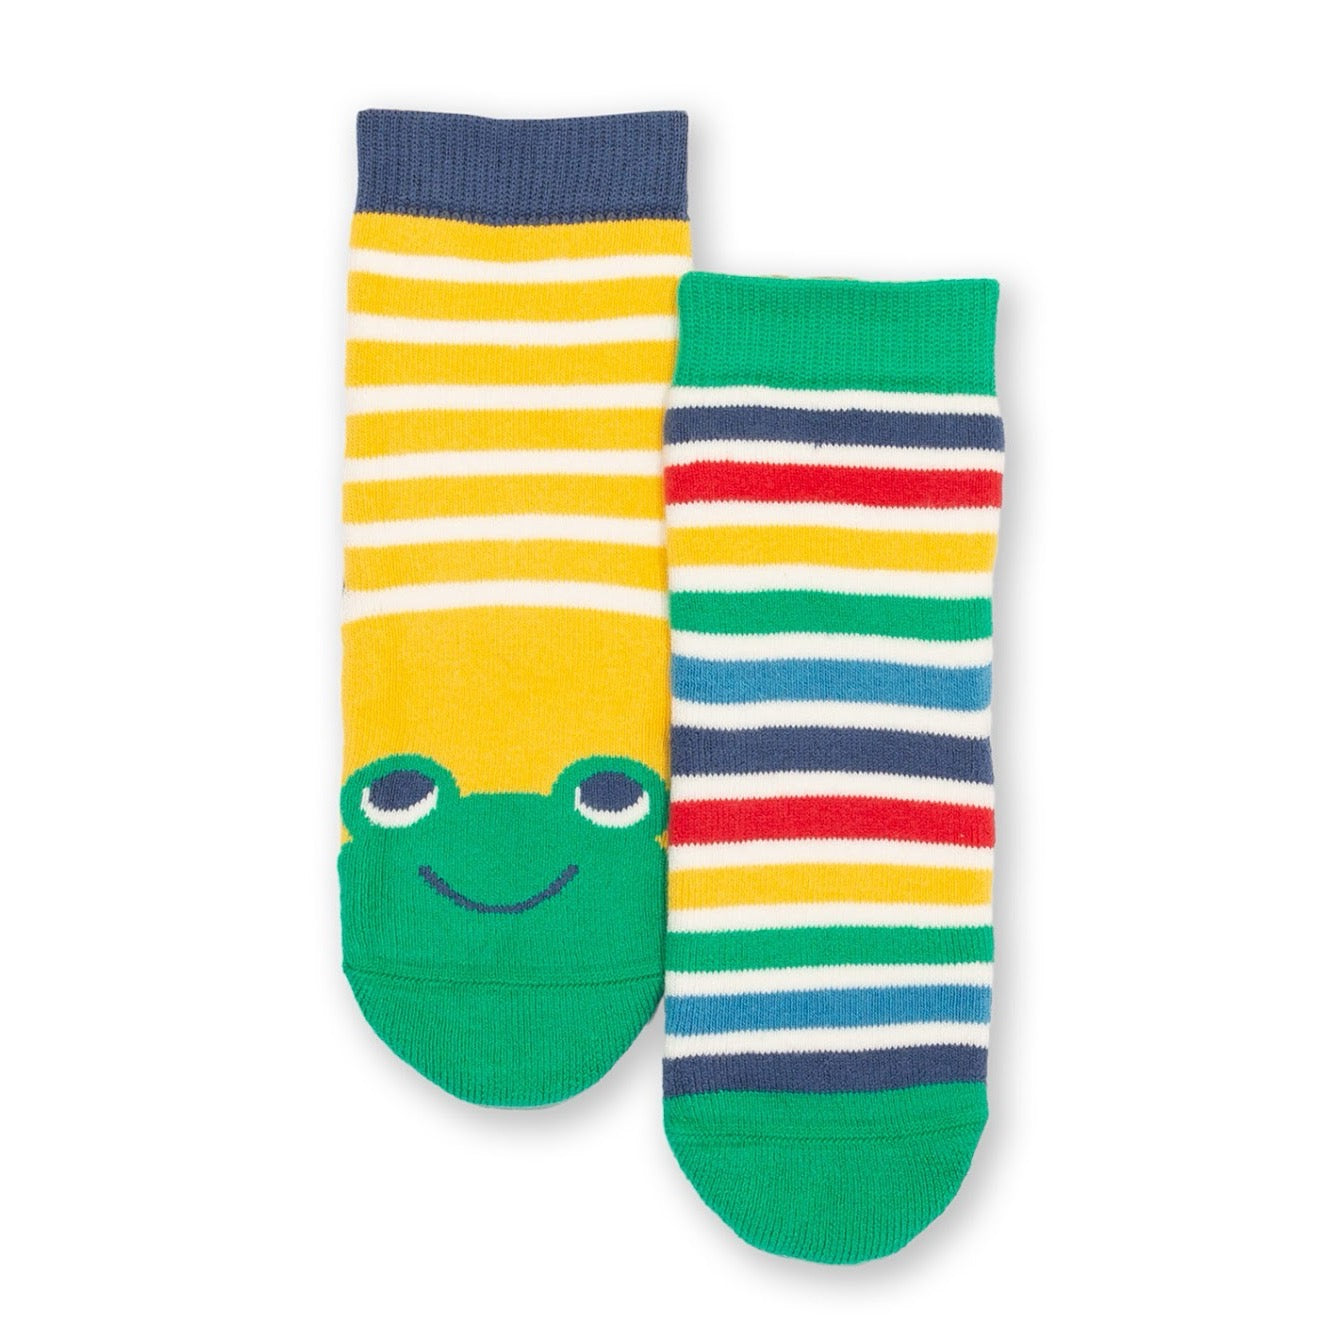 Kite 2 Pack Frog Face Grippy Socks 41-4017 Yellow Clothing 0-6M / Yellow,6-12M / Yellow,12-24M / Yellow,2-3YRS / Yellow